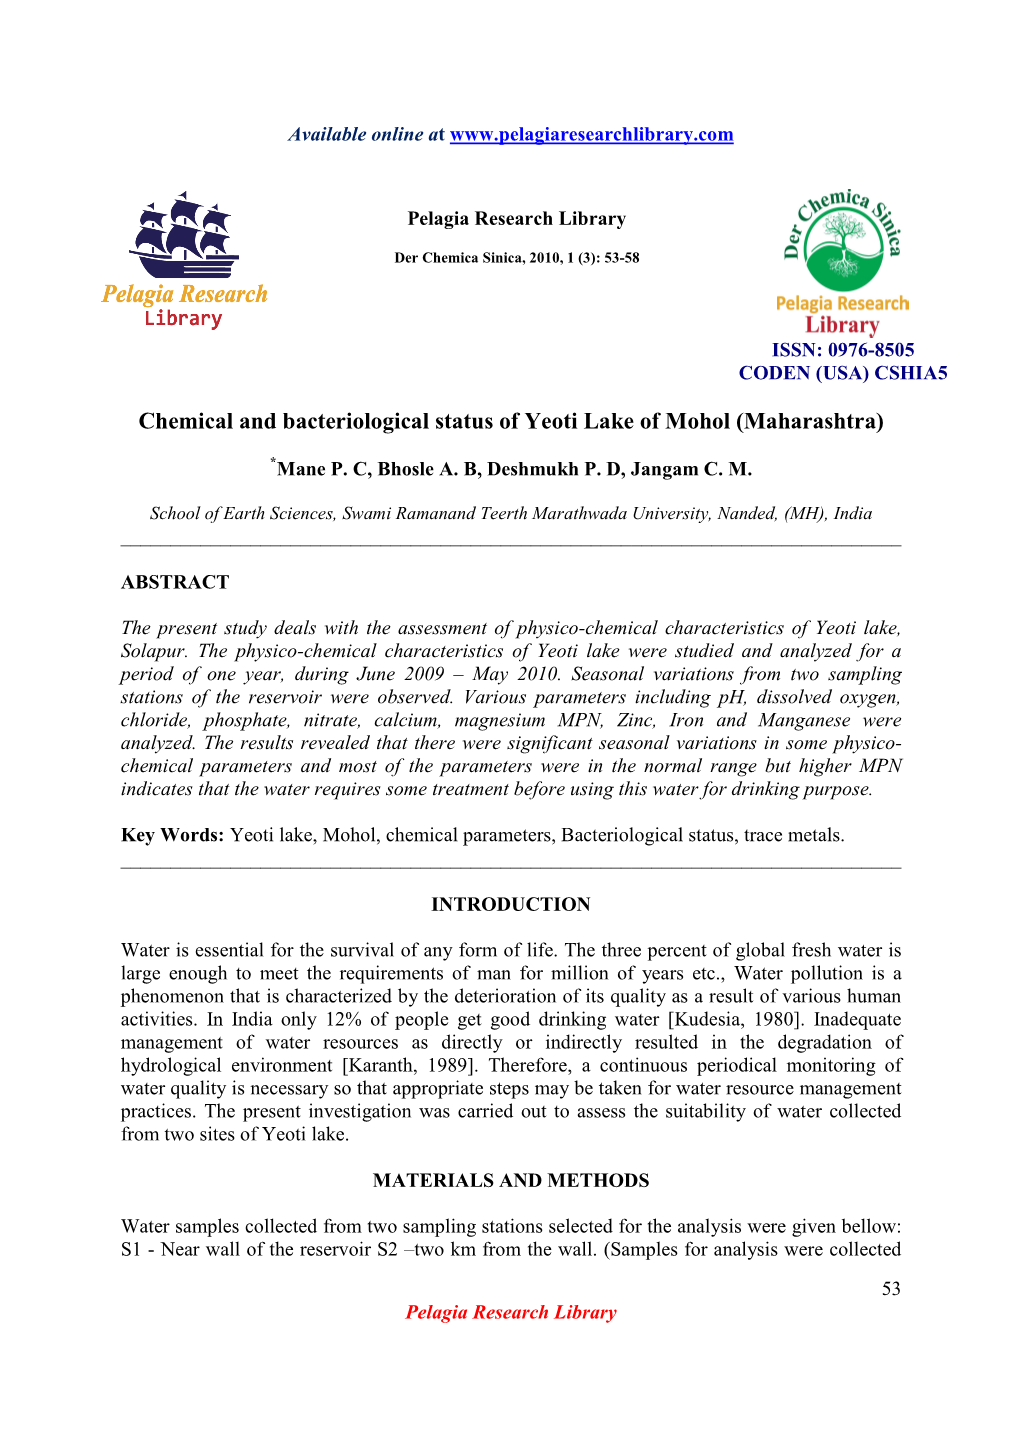 Chemical and Bacteriological Status of Yeoti Lake of Mohol (Maharashtra)